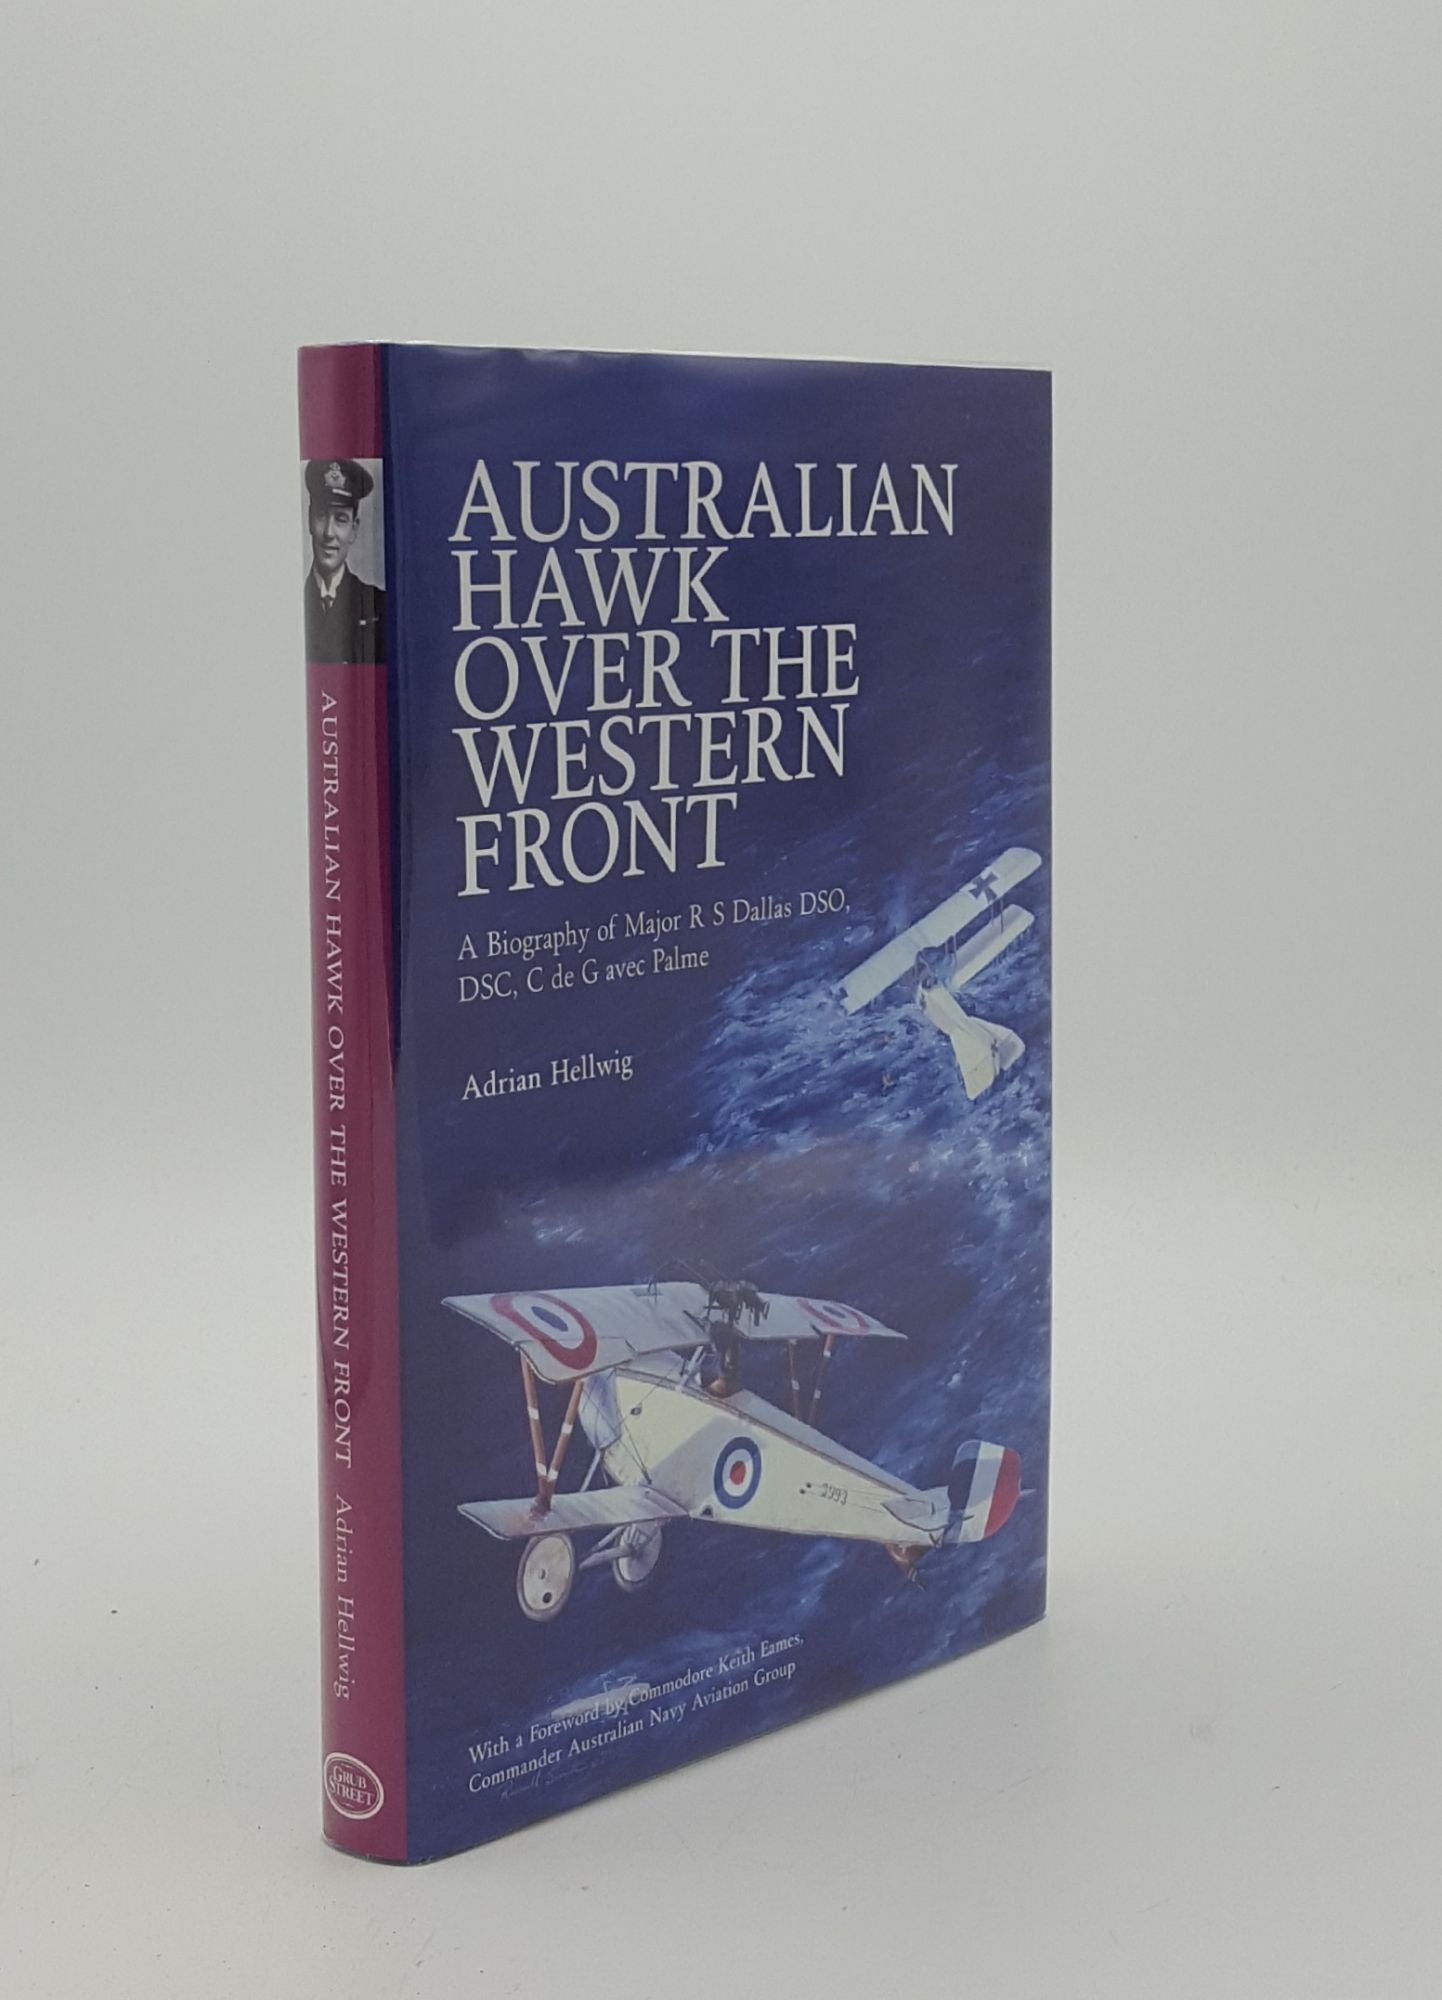 HELLWIG Adrian - Australian Hawk over the Western Front a Biography of Major R.S. Dallas